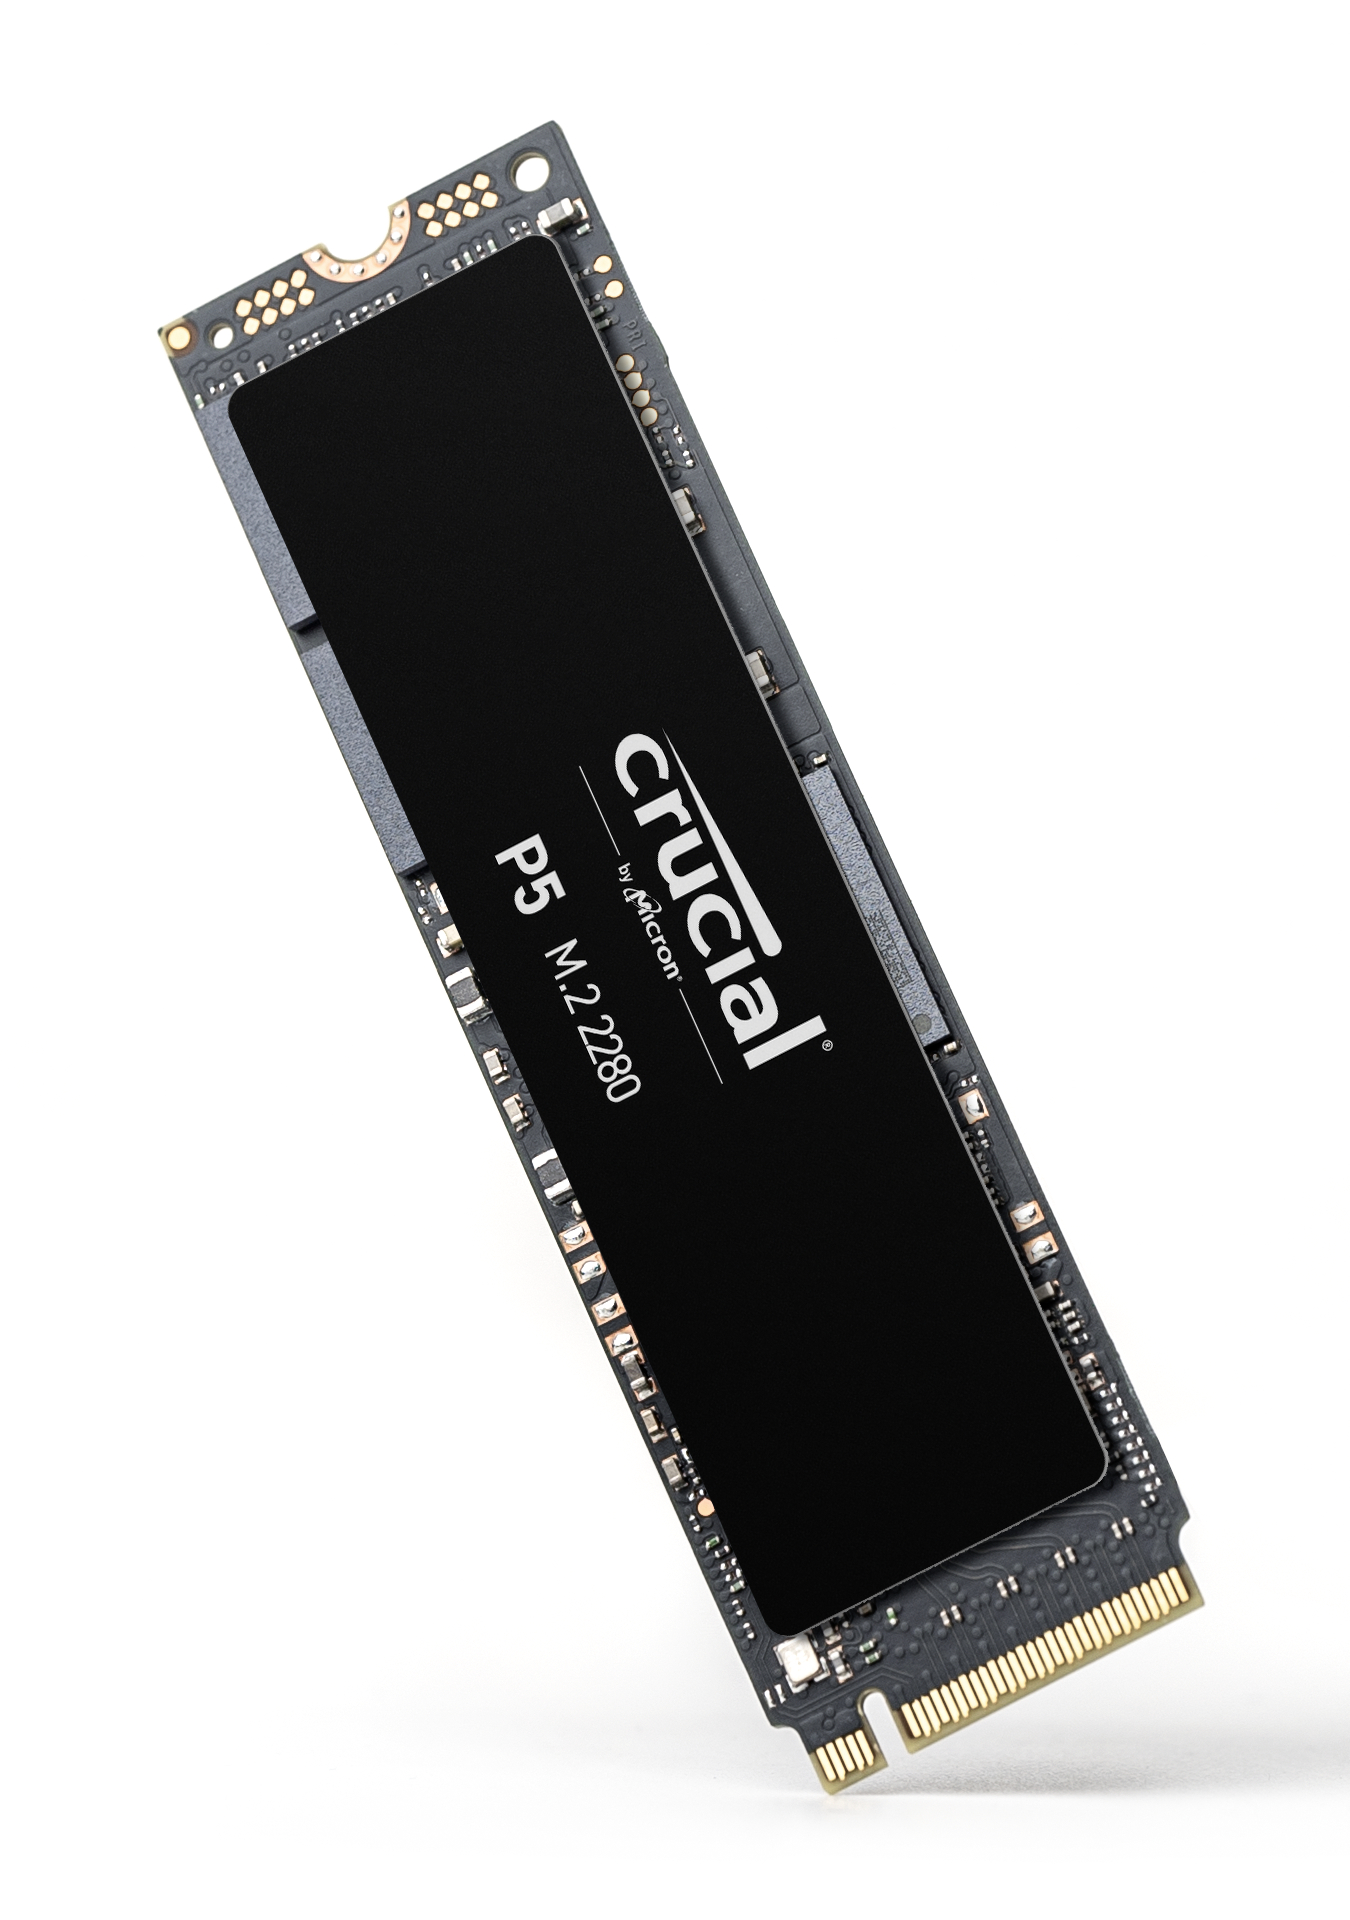 CRUCIAL P5 Festplatte, 1 TB PCIe, M.2 intern SSD via